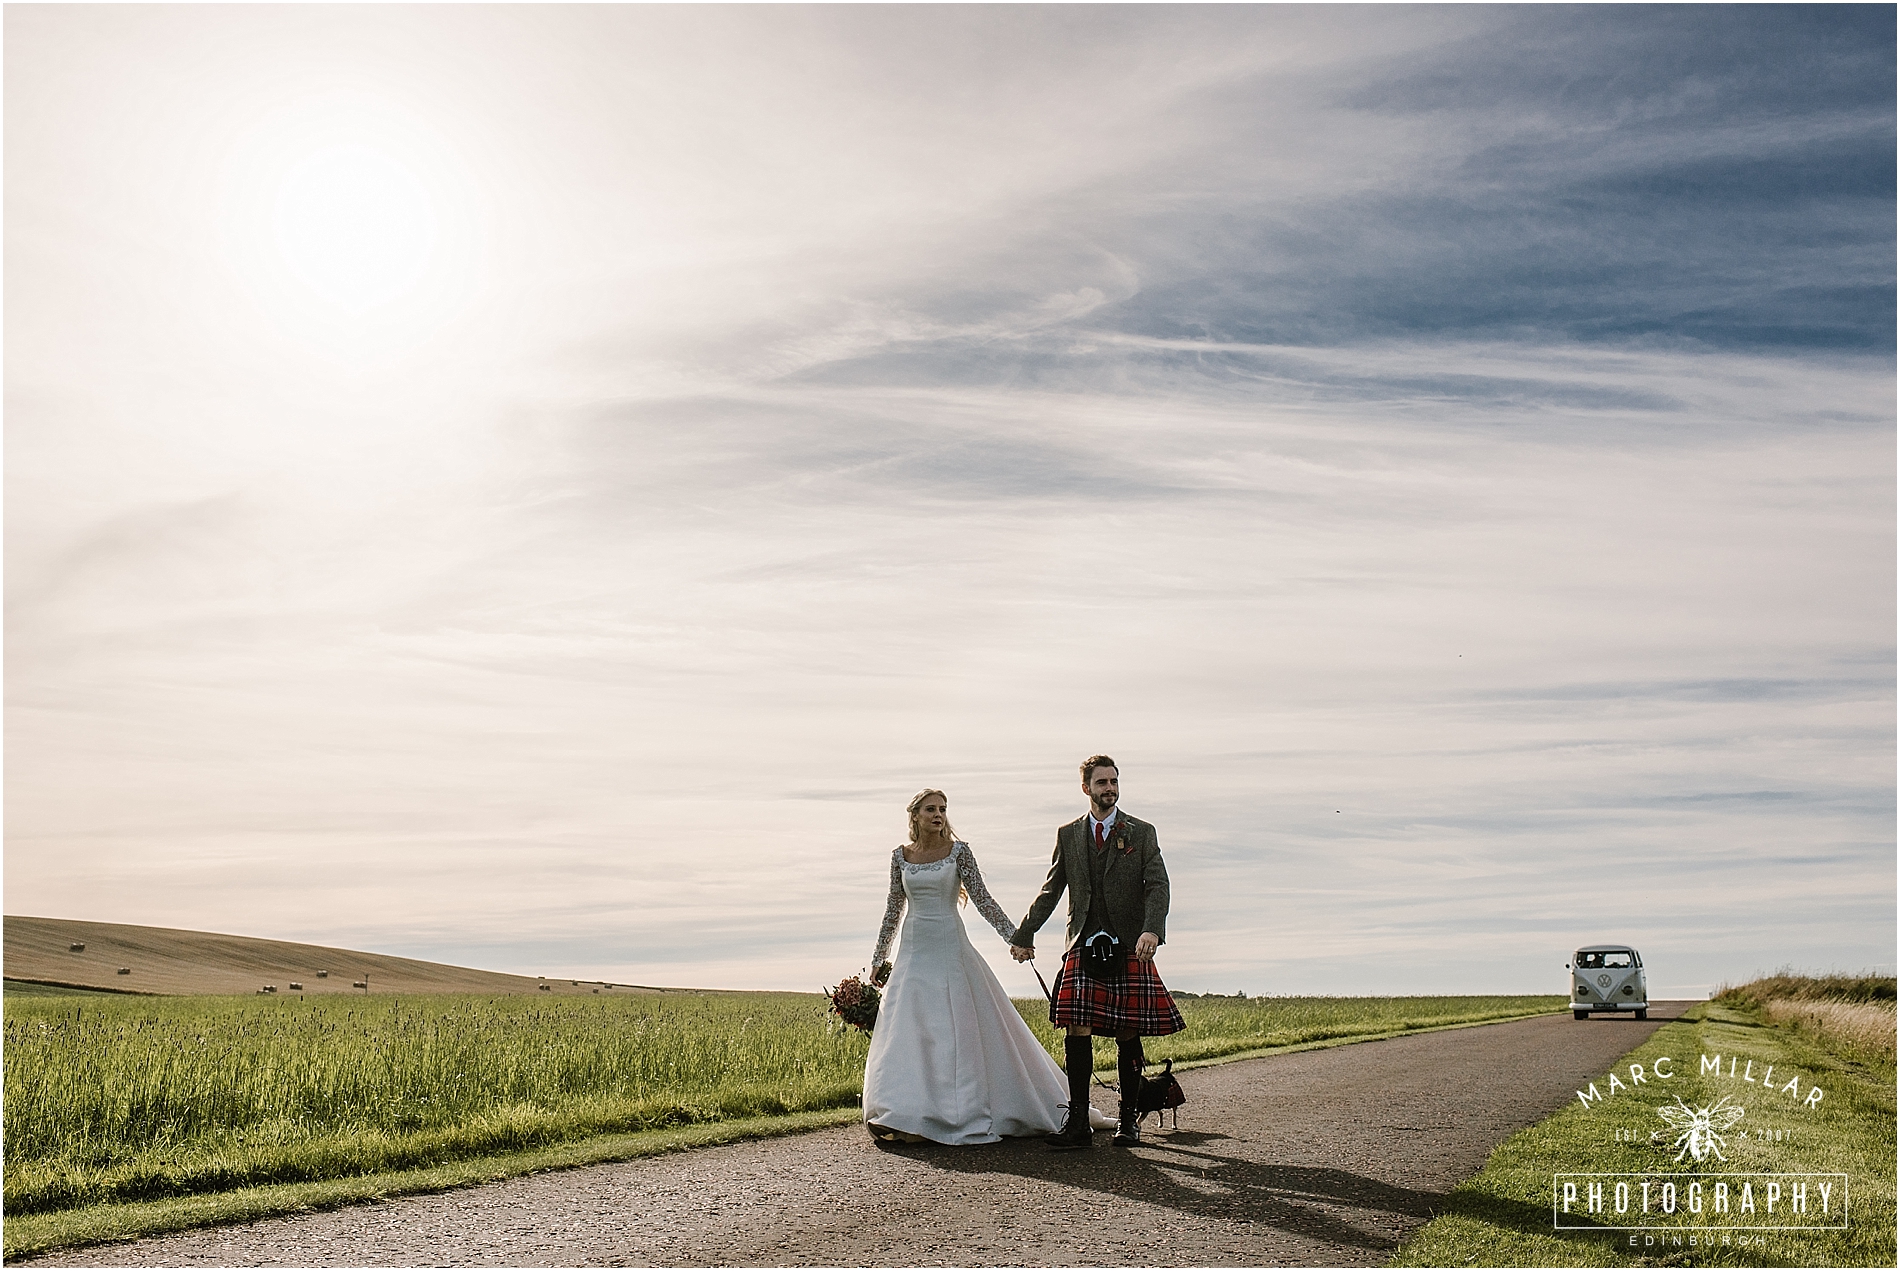  Kinkell Byre Wedding Shoot by Marc Millar Photography 